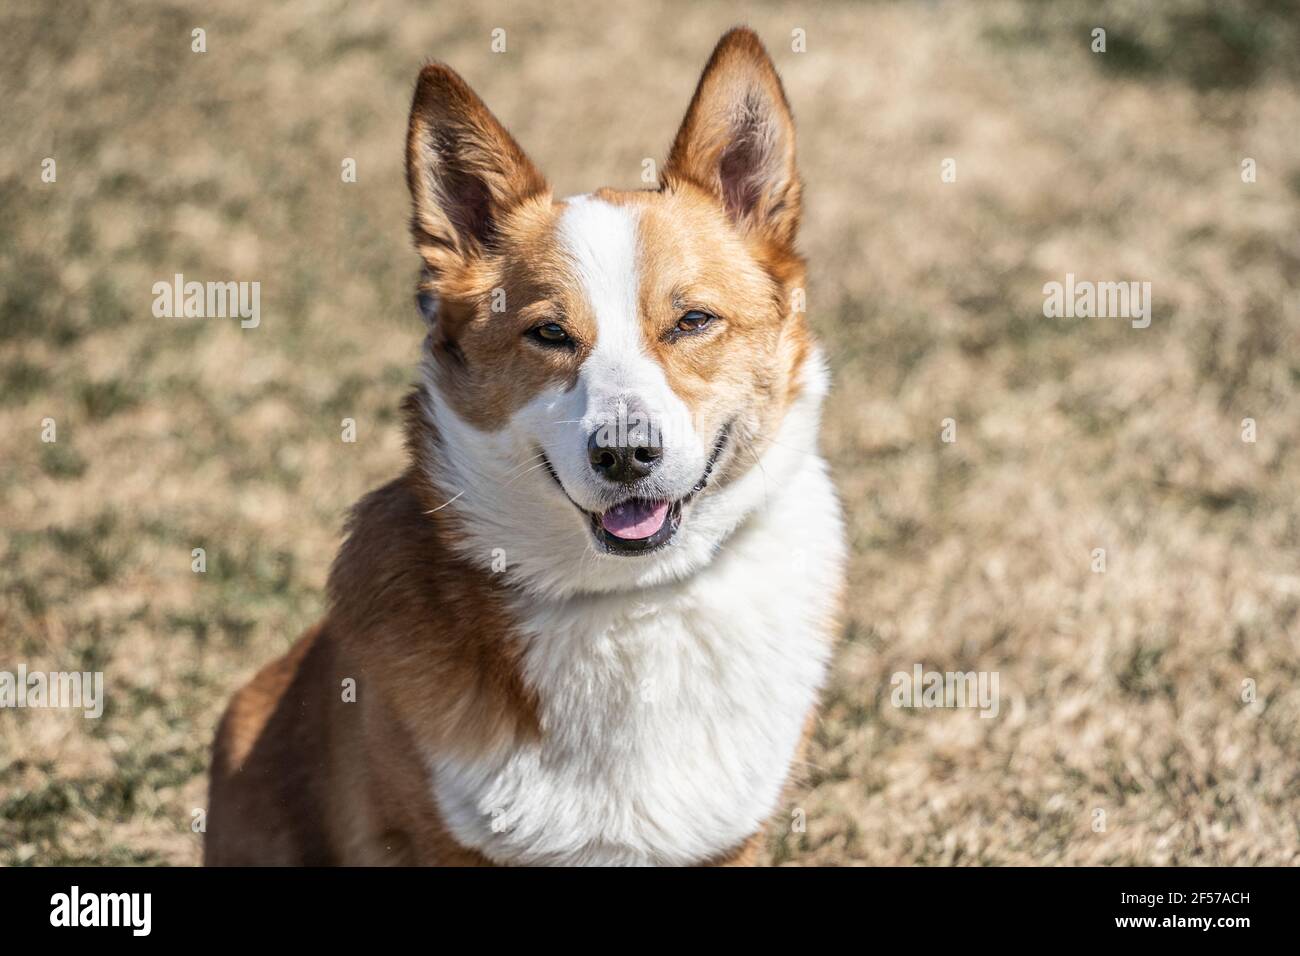 Adorable corgi dog seems to be smiling at the camera. Stock Photo